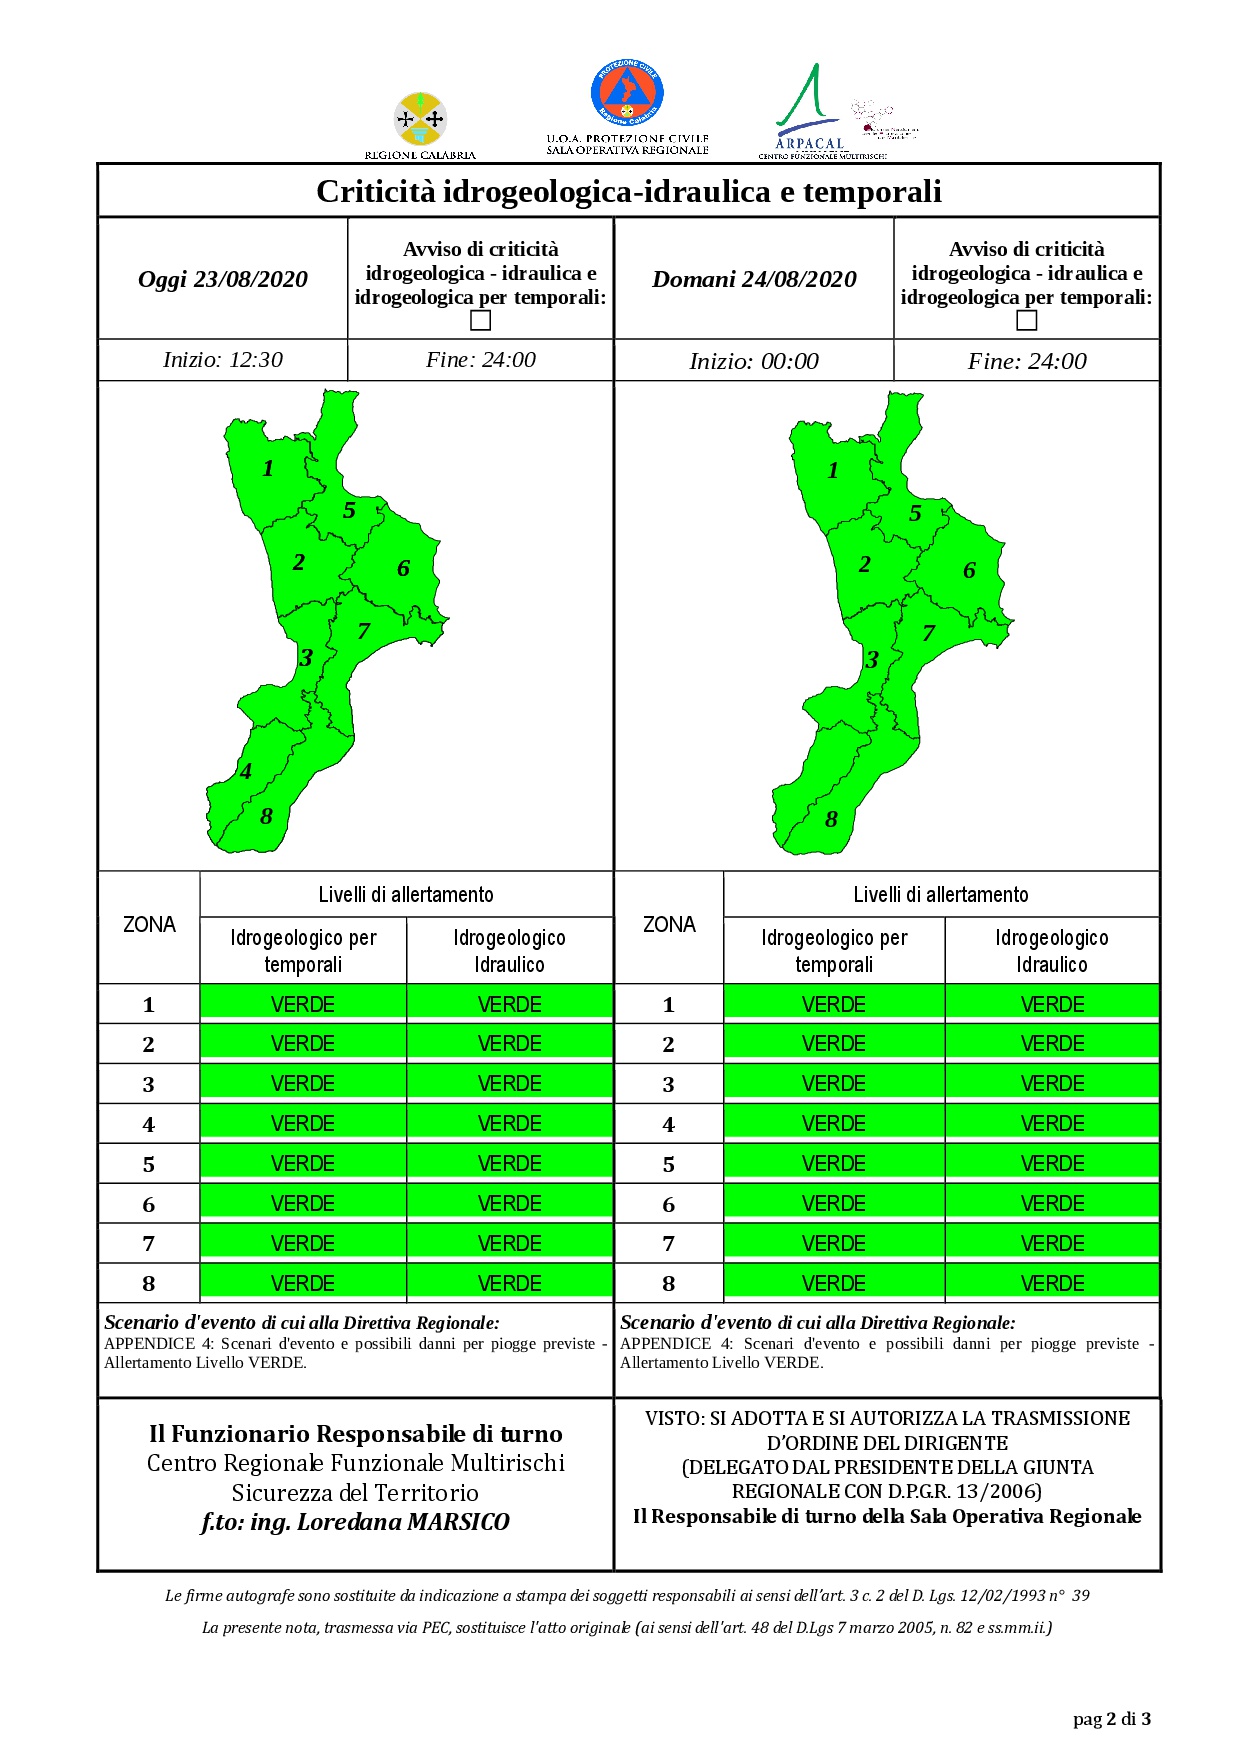 Criticità idrogeologica-idraulica e temporali in Calabria 23-08-2020